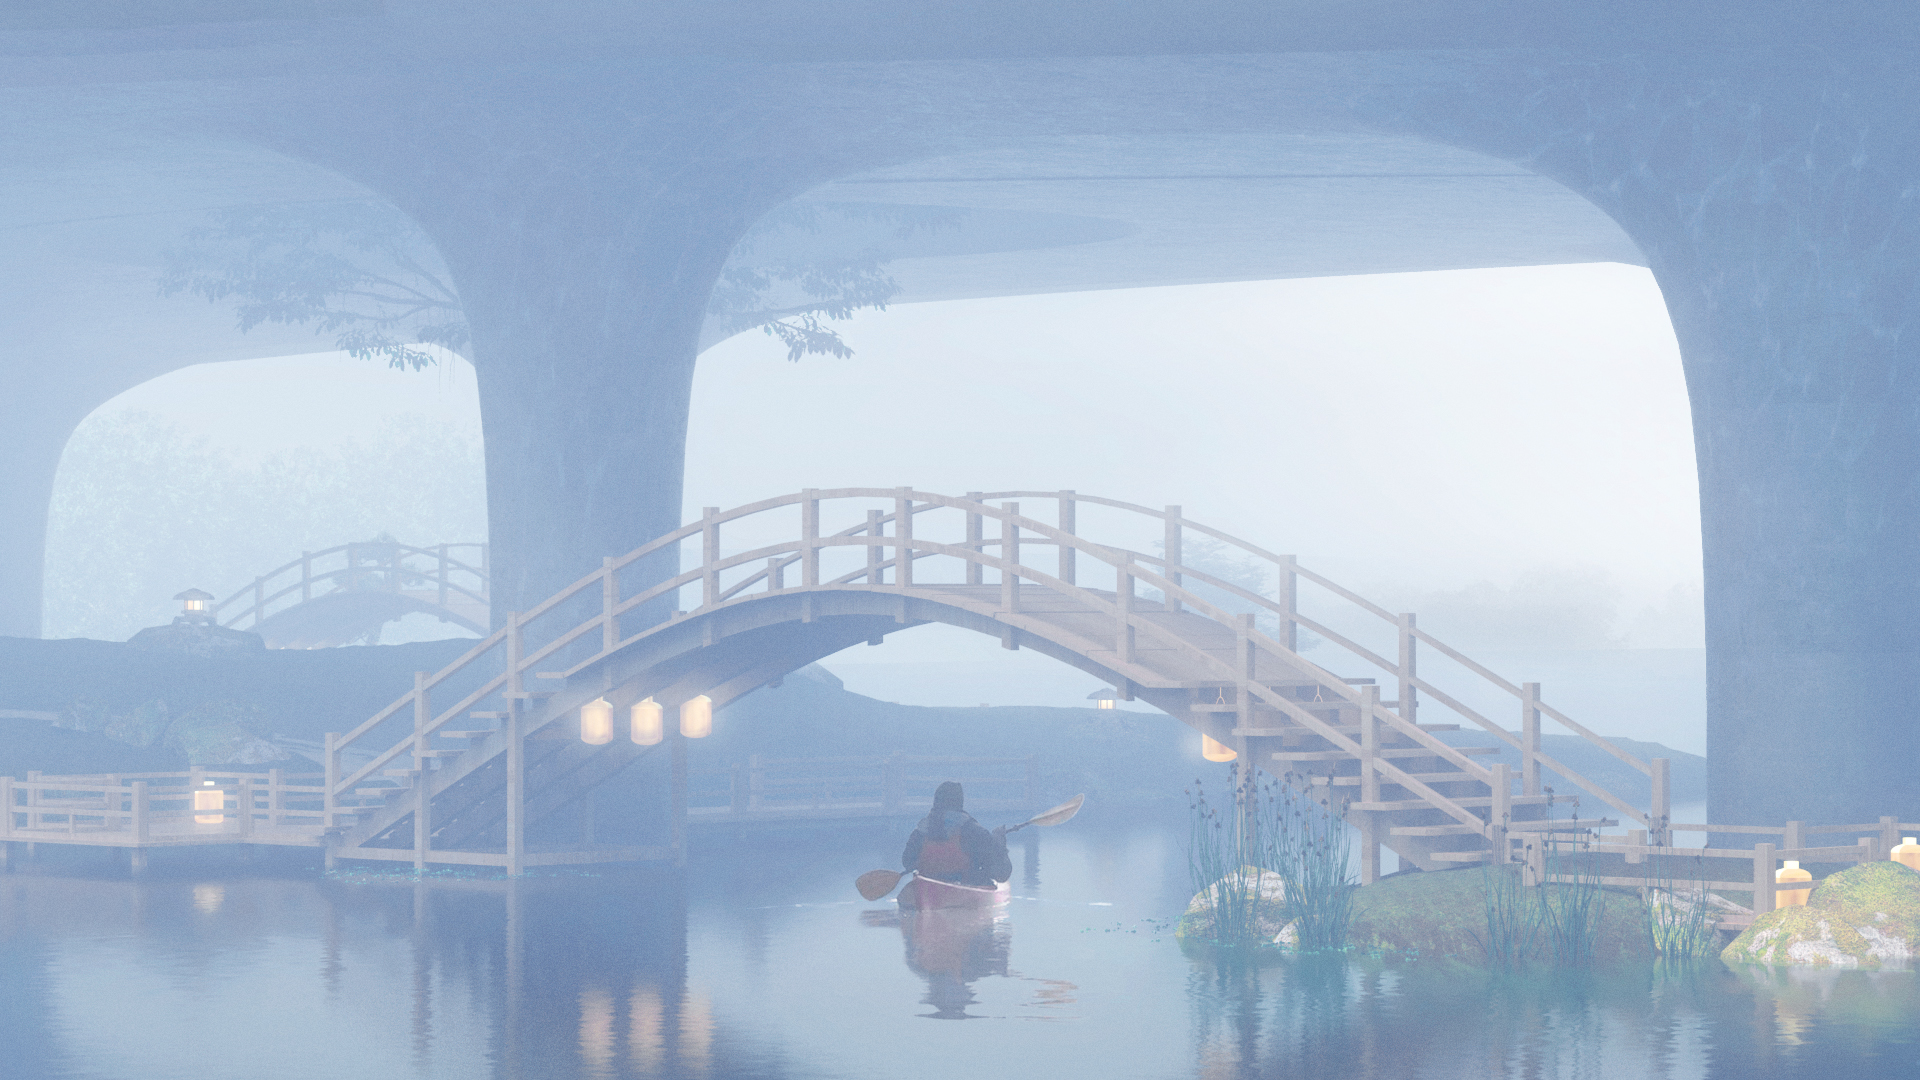 Full res render of Eco Bridge